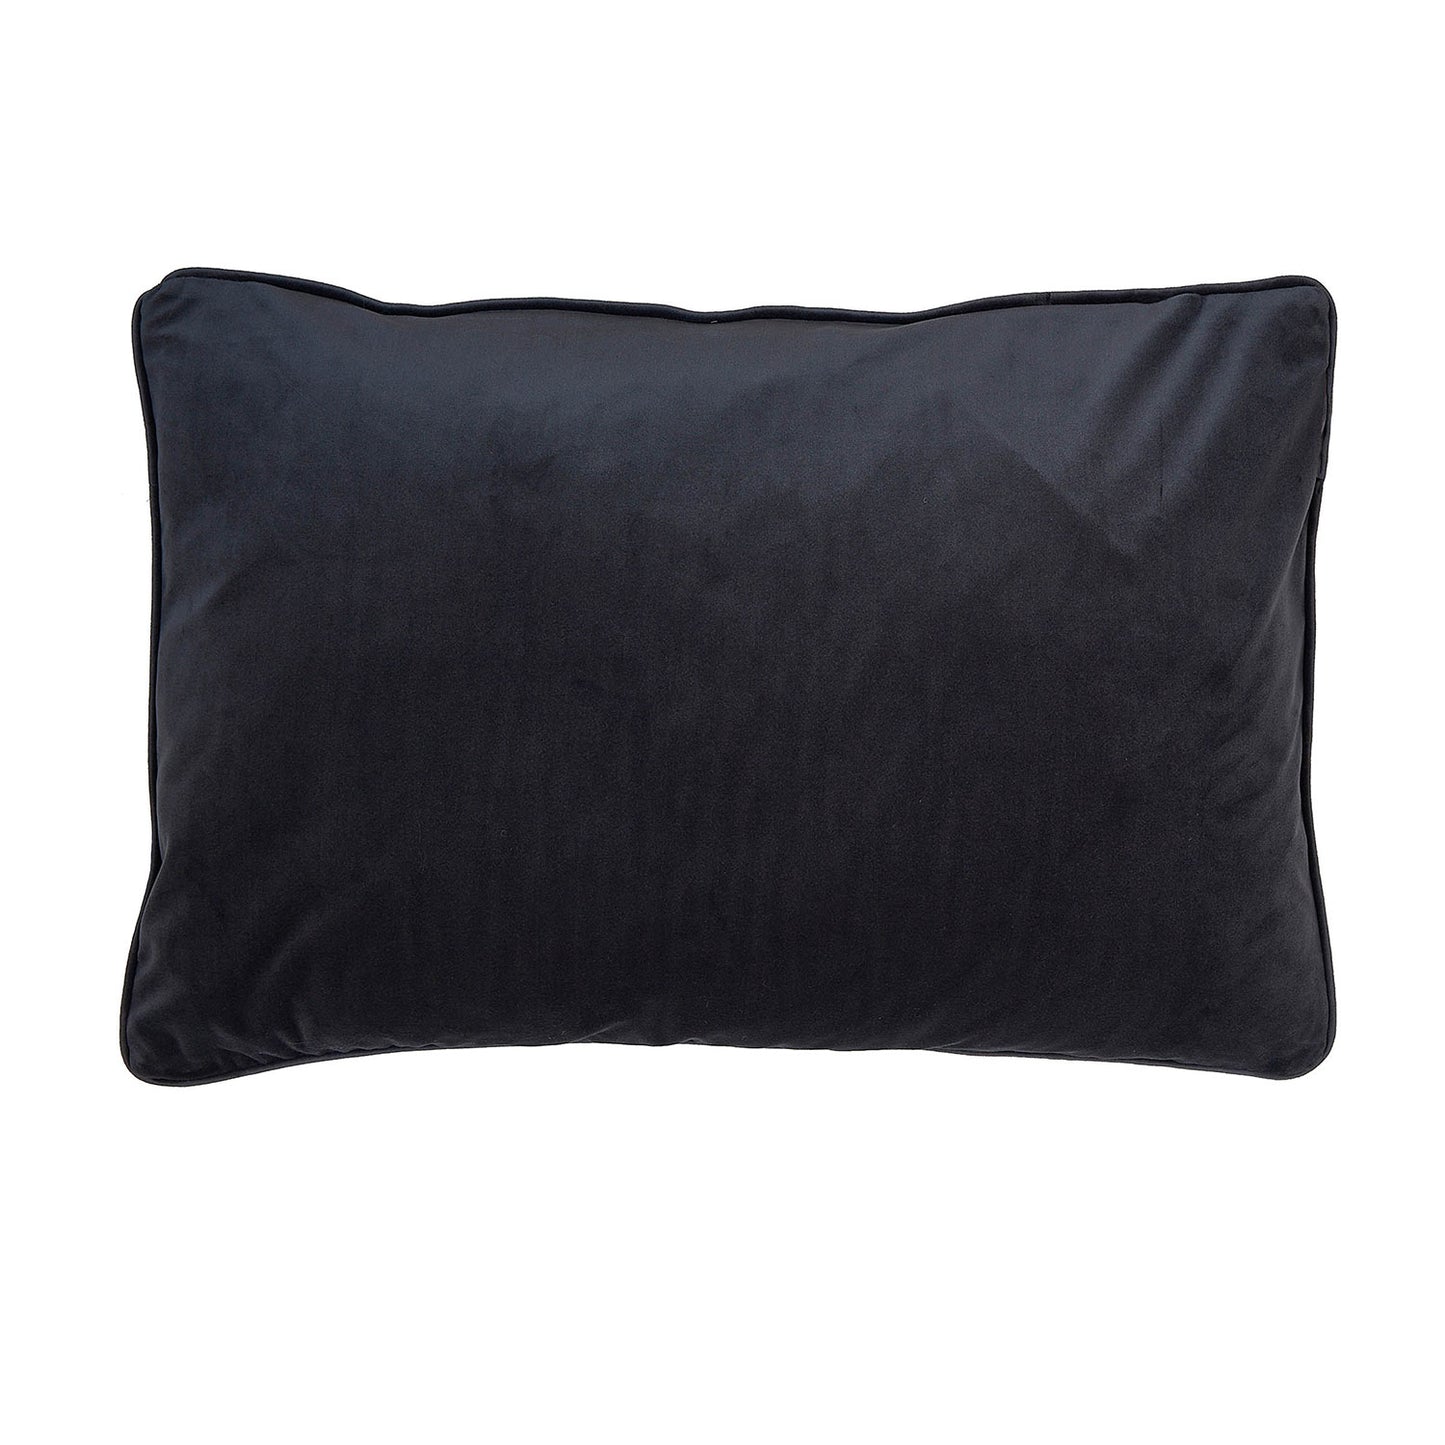 Clarissa Hulse Woodland Fern Ink Blue Velvet Feather Cushion (40cm x 60cm)